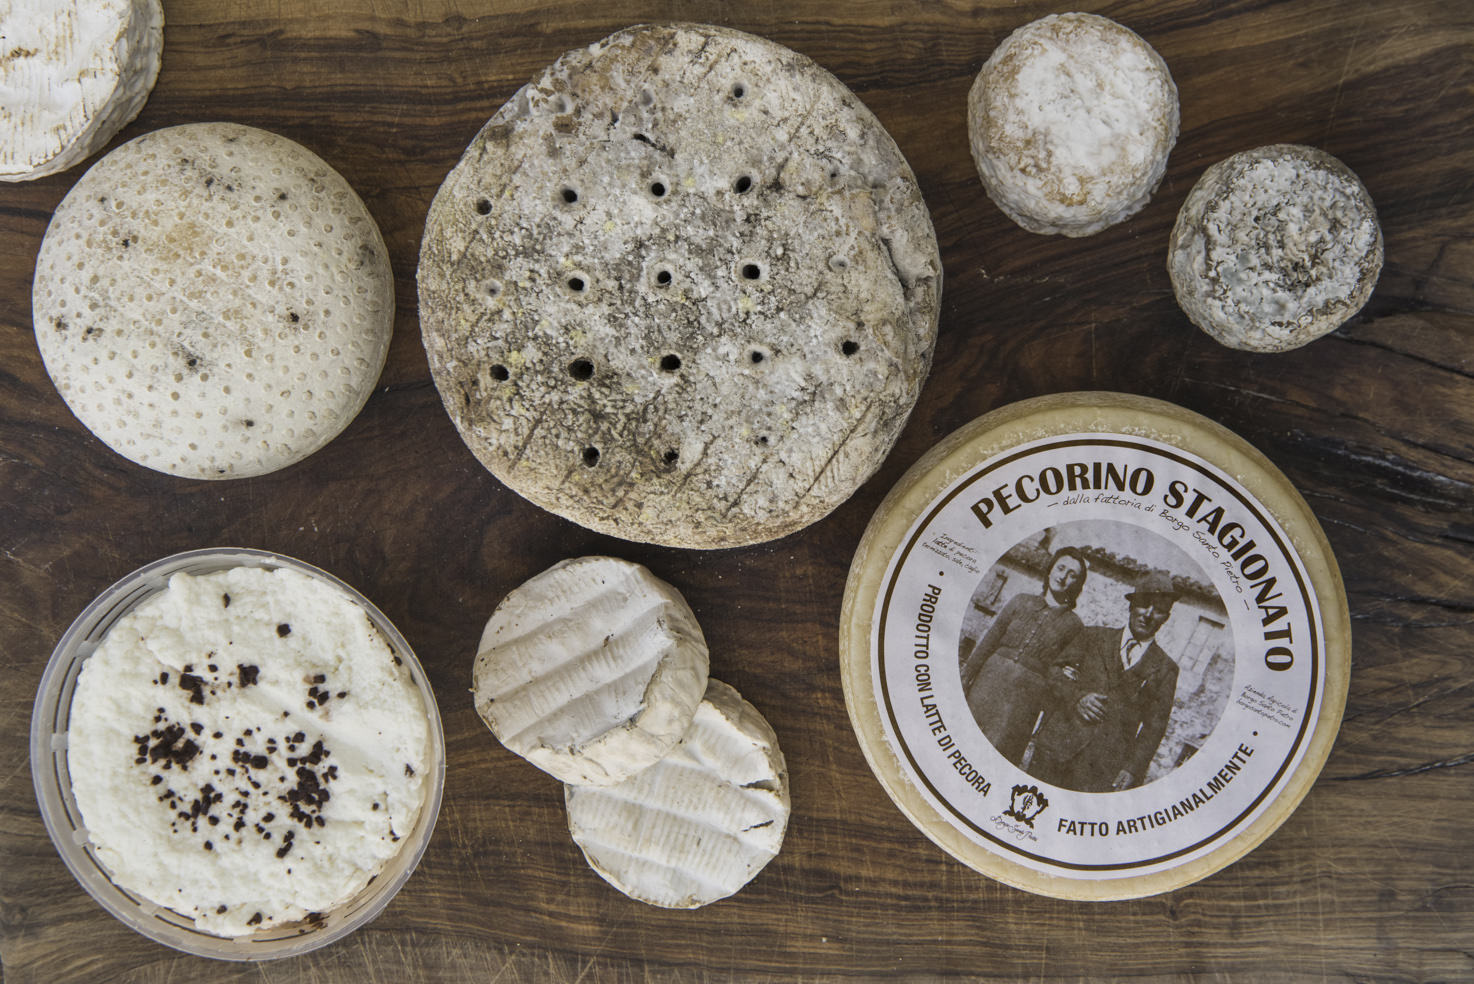 Pecorino cheese from the farm of Borgo Santo Pietro